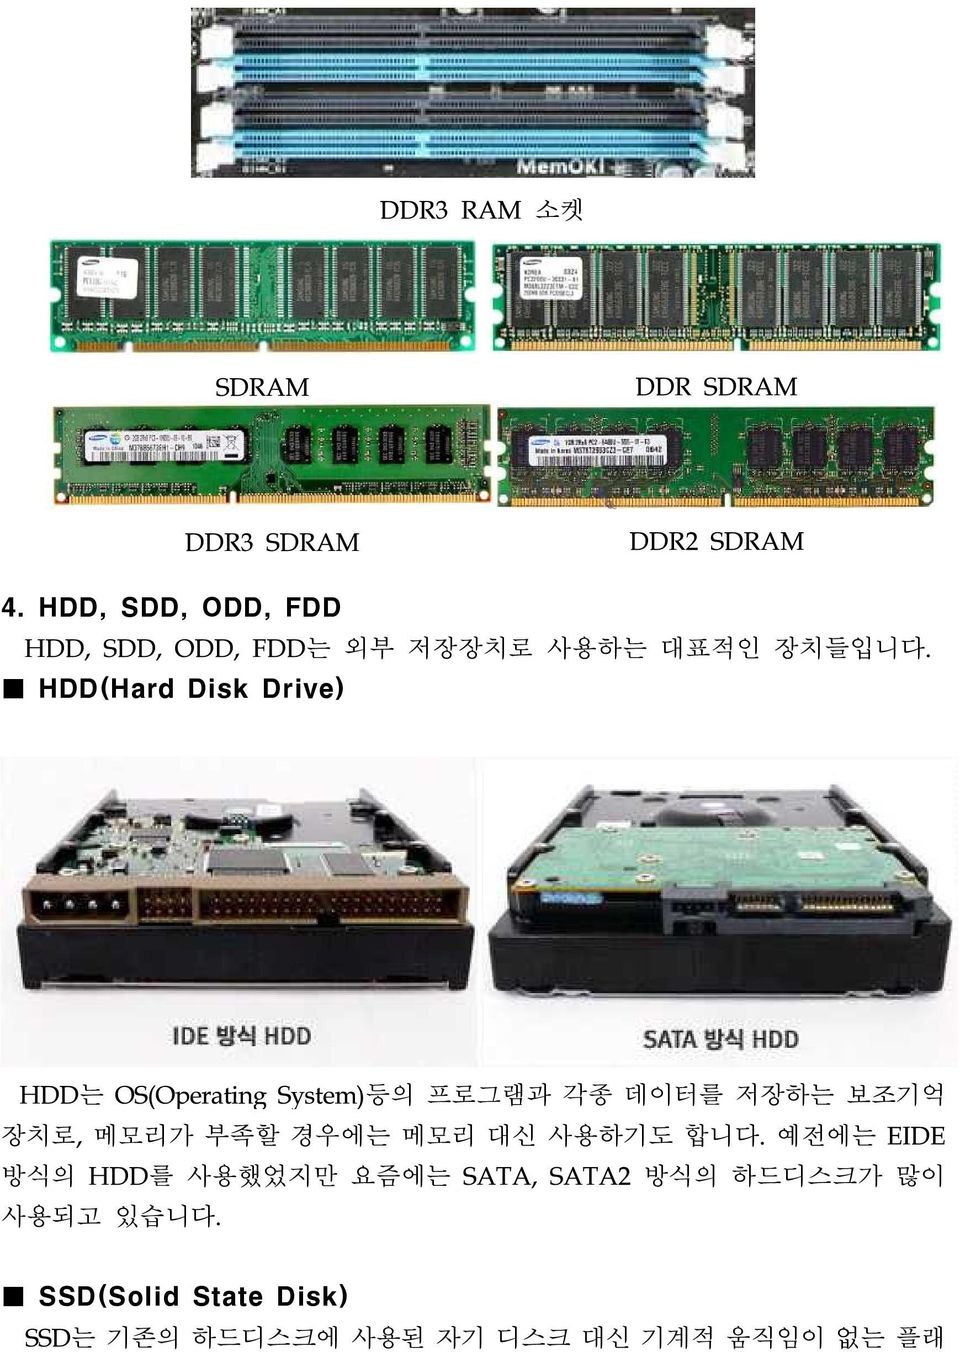 HDD(Hard Disk Drive) HDD는 OS(Operating System)등의 프로그램과 각종 데이터를 저장하는 보조기억 장치로, 메모리가 부족할